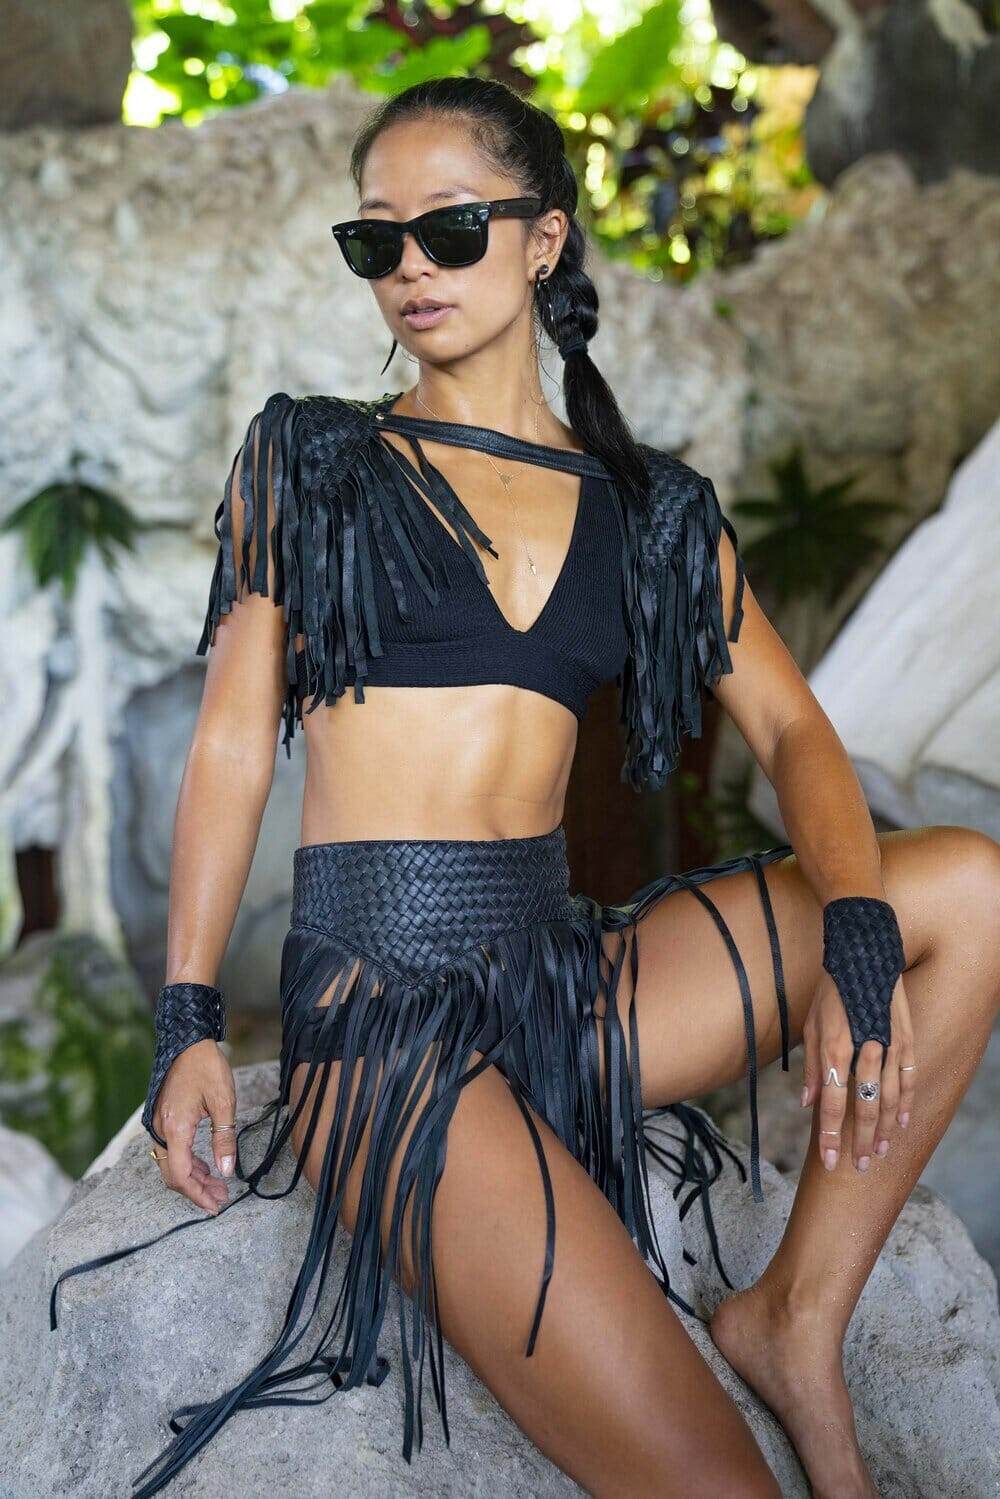 Leather Fringe Skirt for Burning Man Costume and Festival Wear by Love Khaos